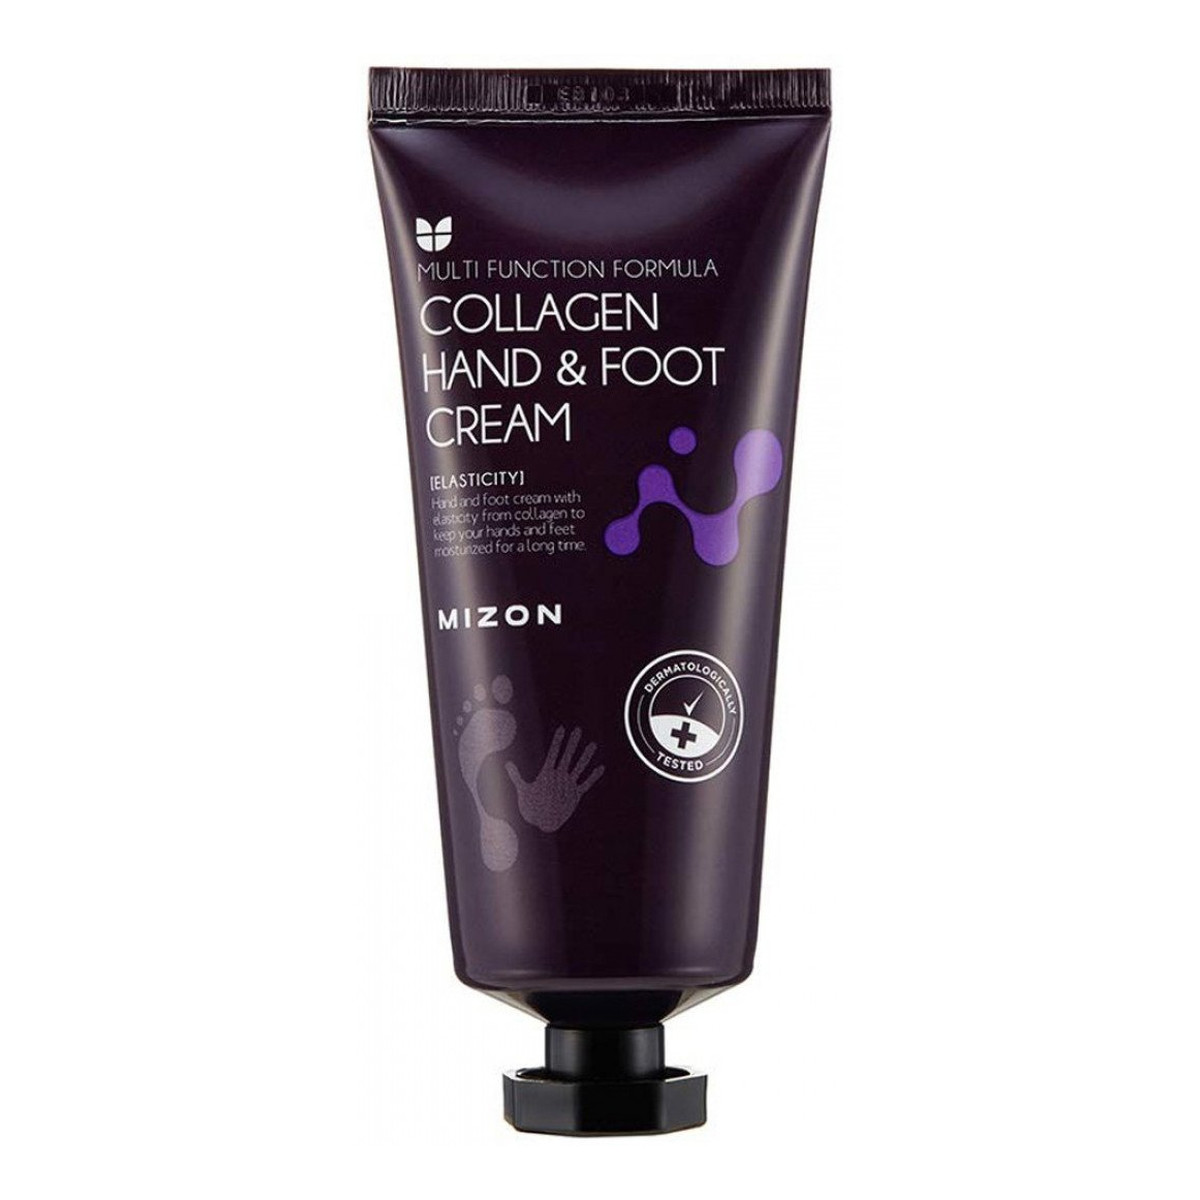 Mizon Multi Function Formula Collagen Hand & Foot Cream kolagenowy Krem do rąk i stóp 100ml